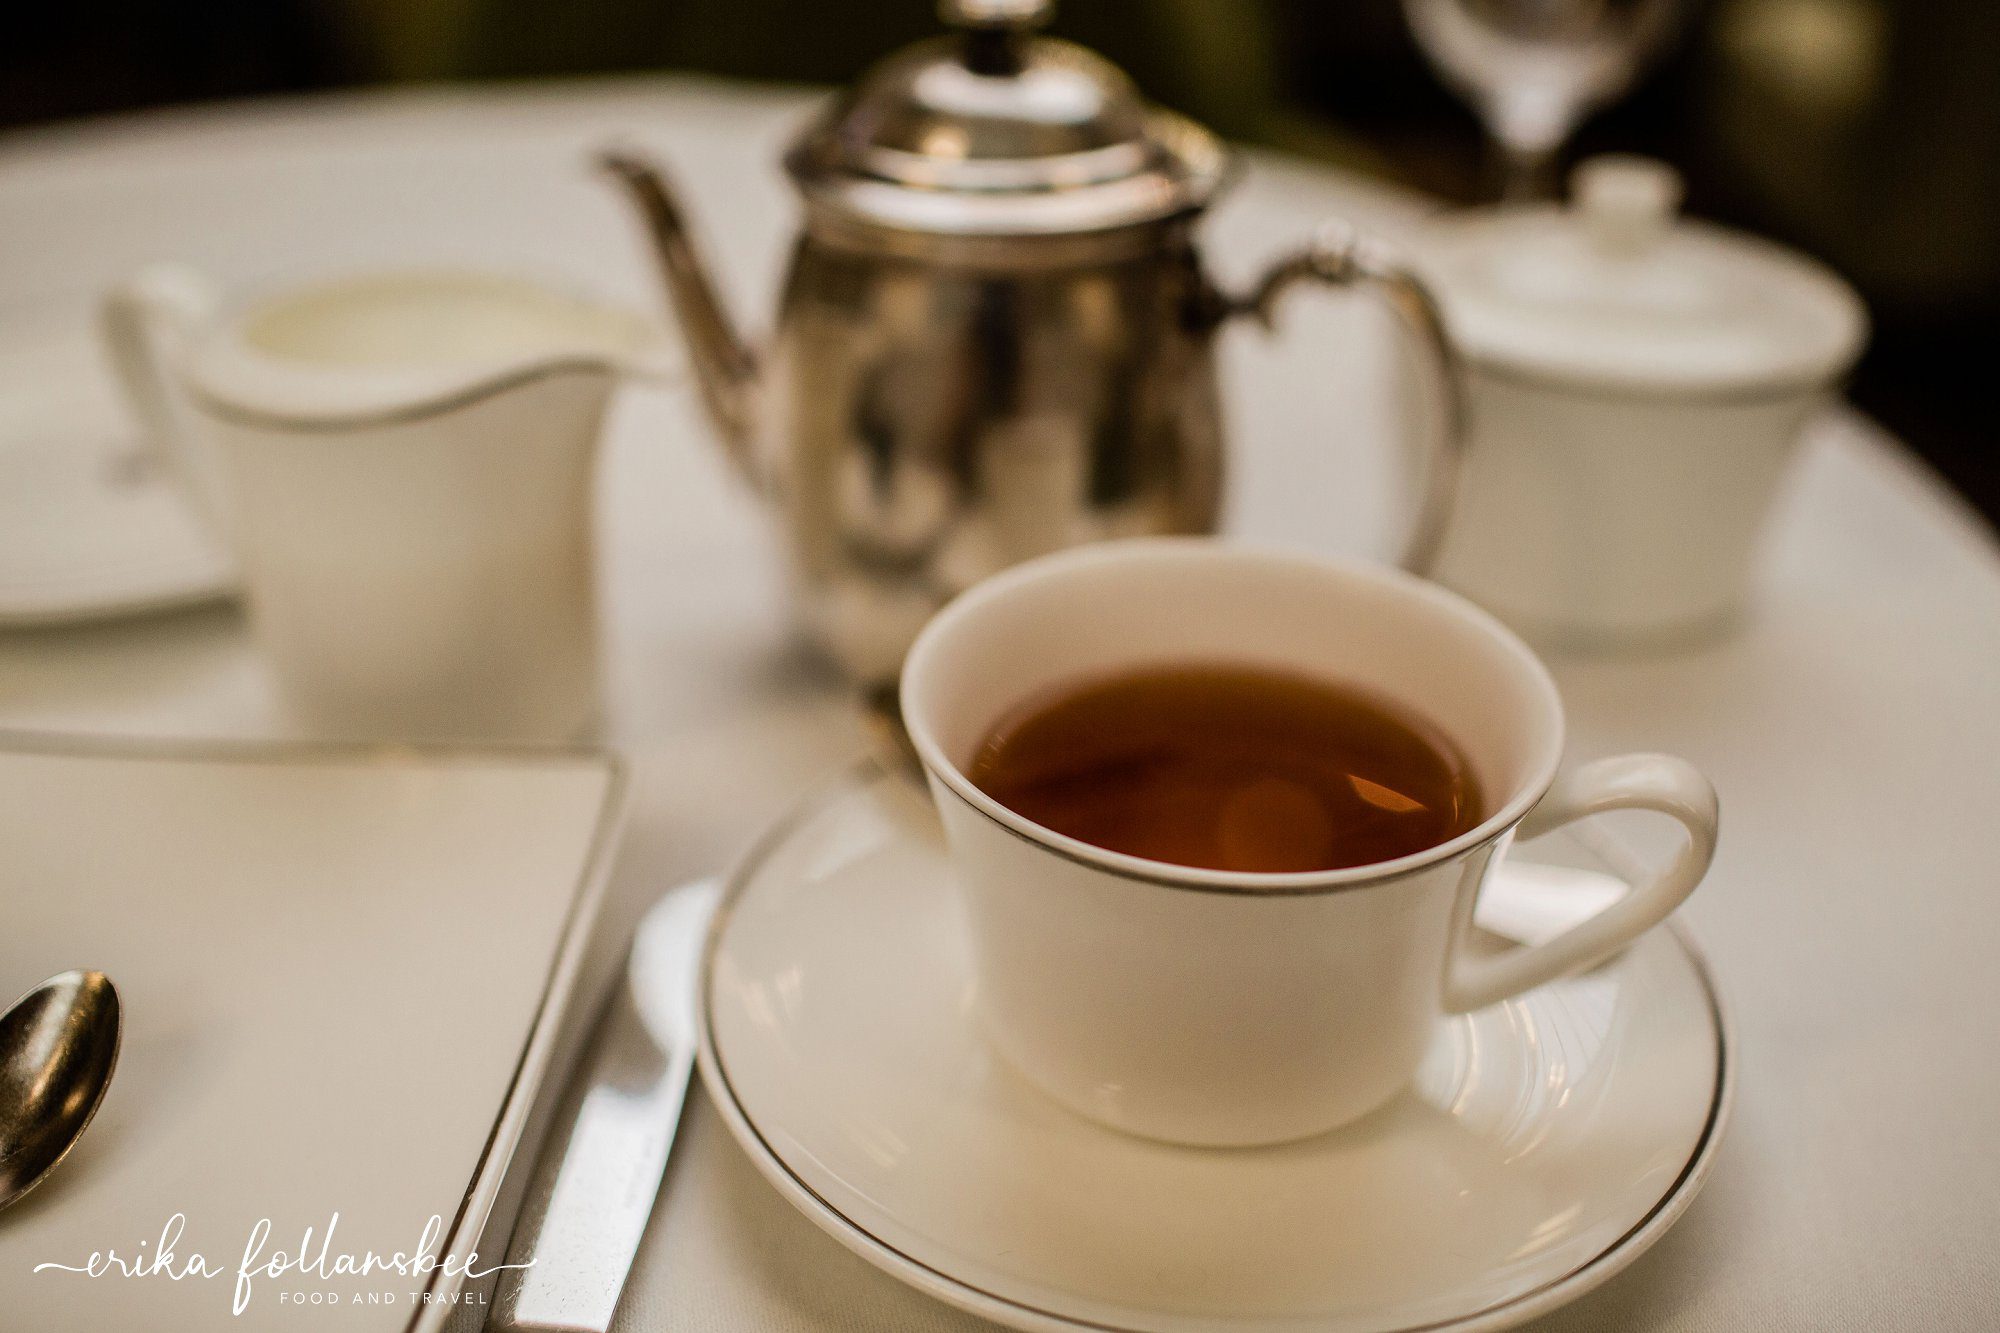 Scottish afternoon tea at the Balmoral Hotel, Edinburgh